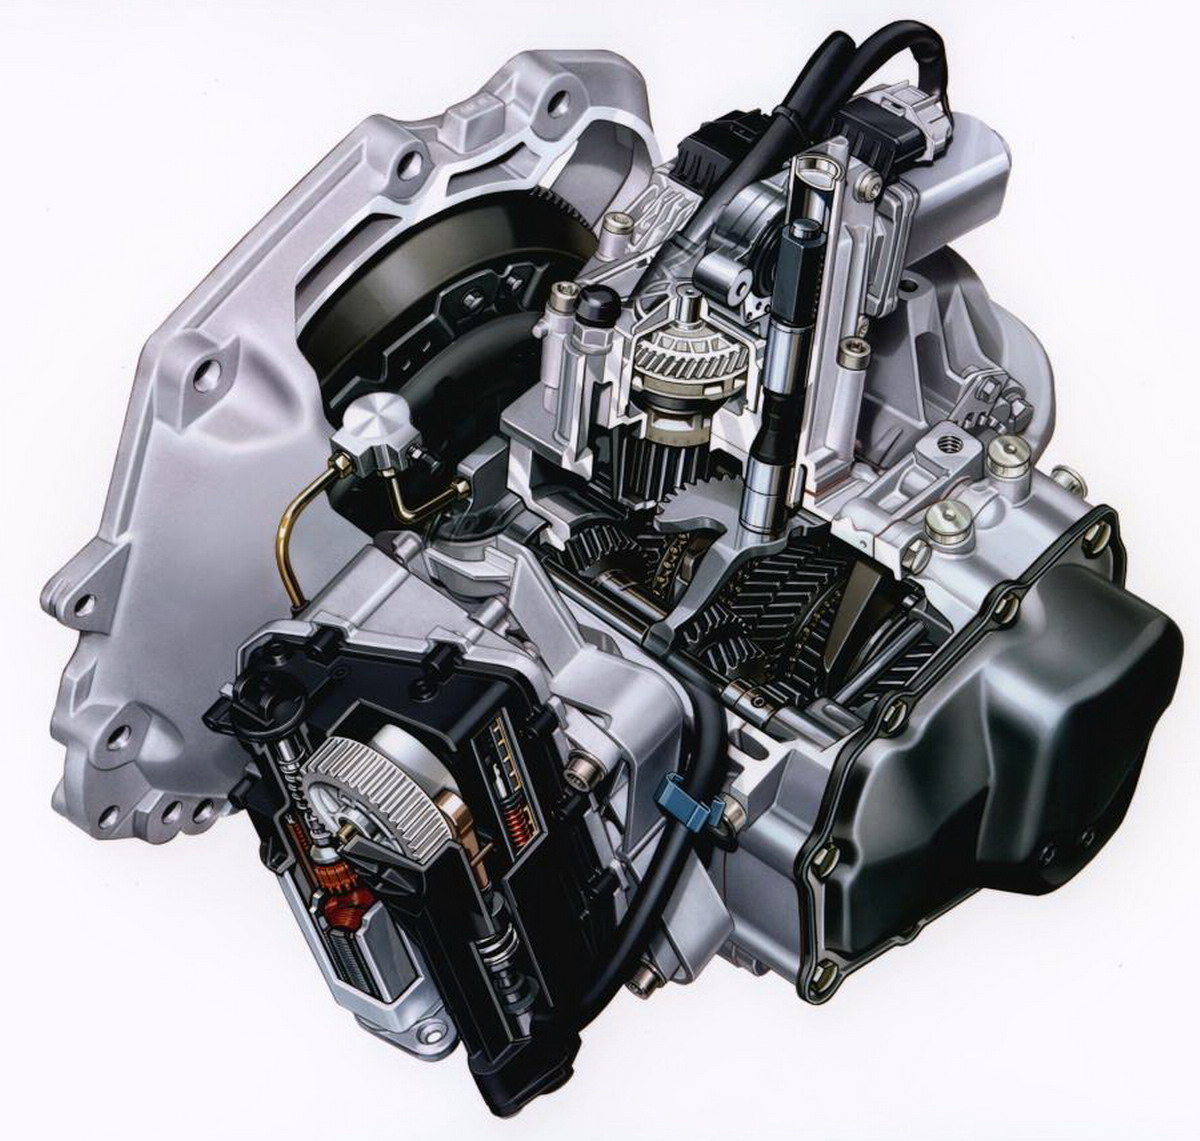 Opel-Easytronic-3-0-transmission